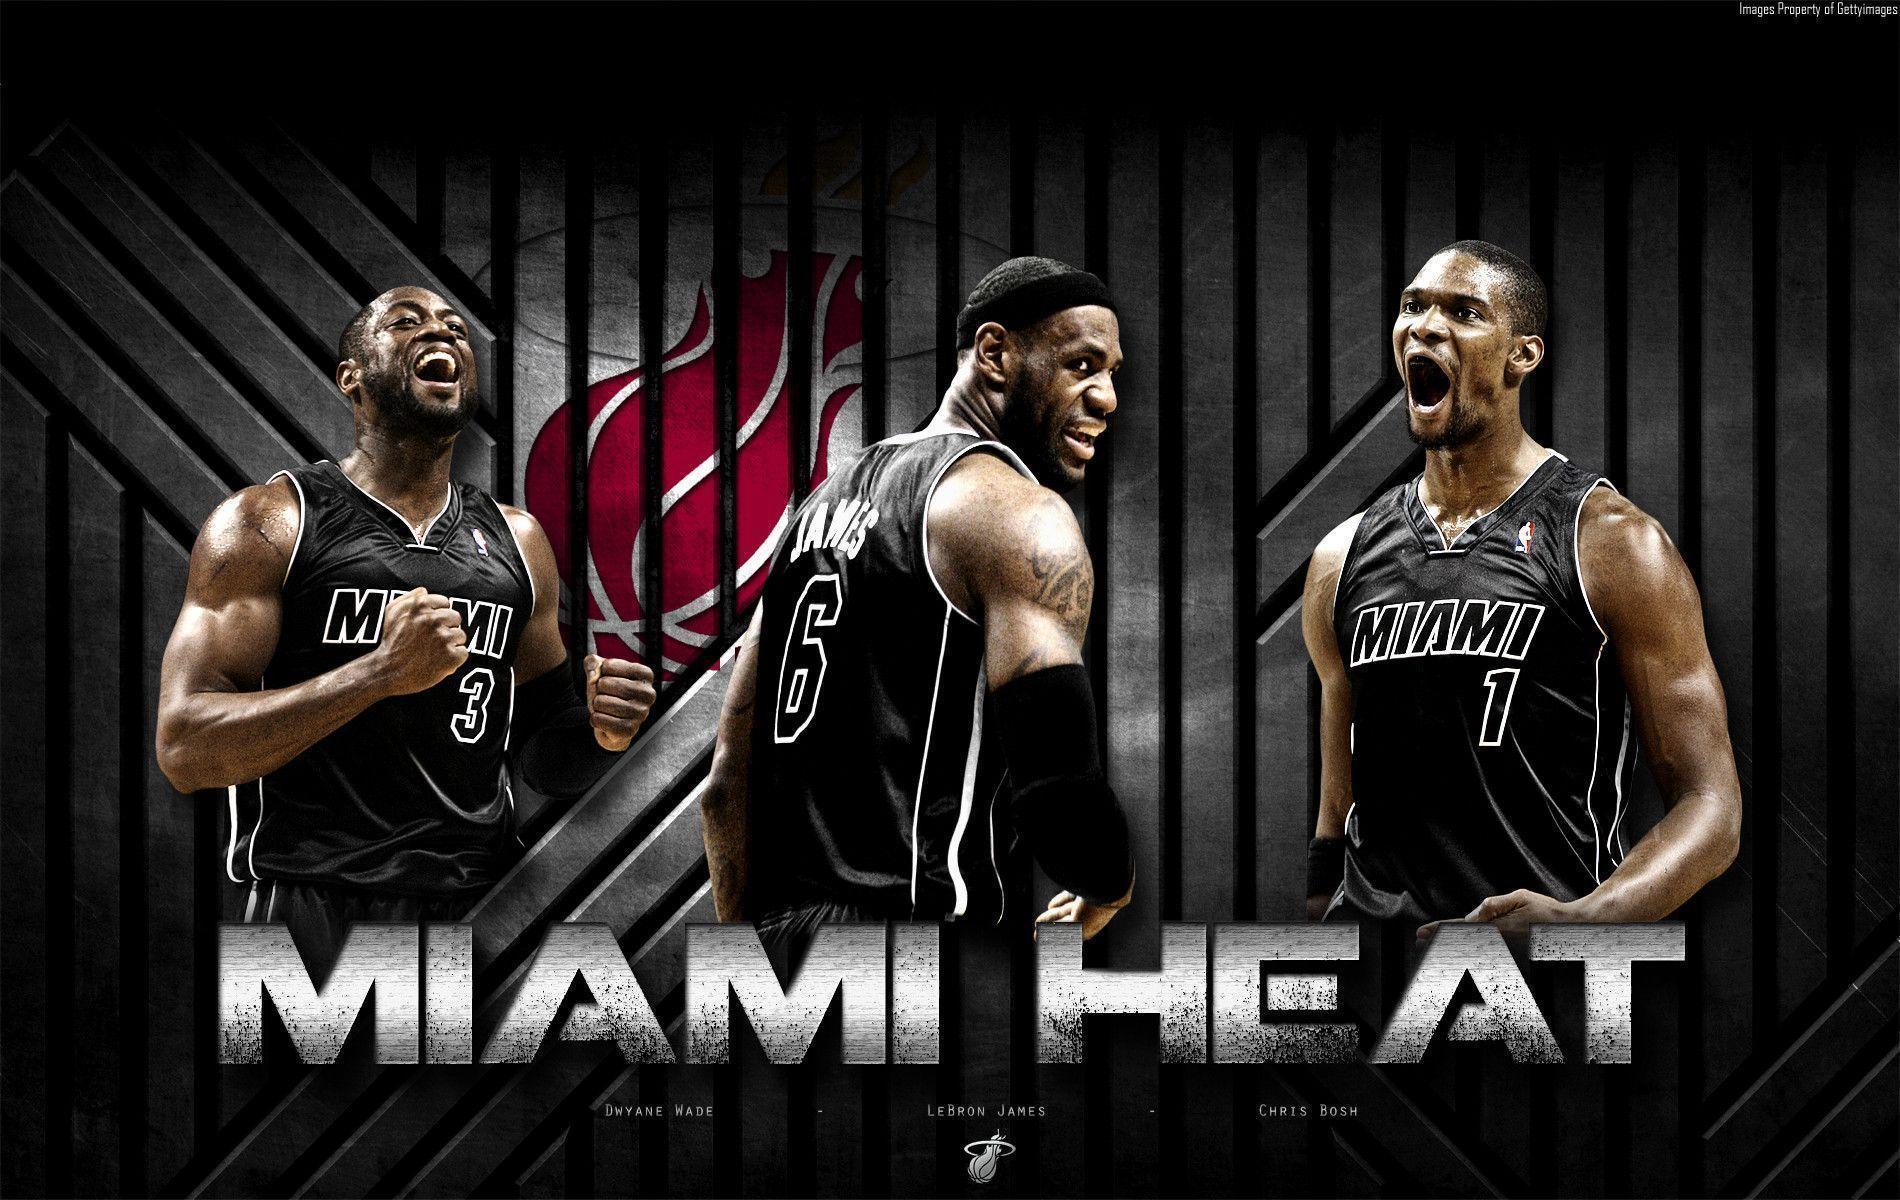 Miami Heat 104 87523 Image HD Wallpaper. Wallfoy.com